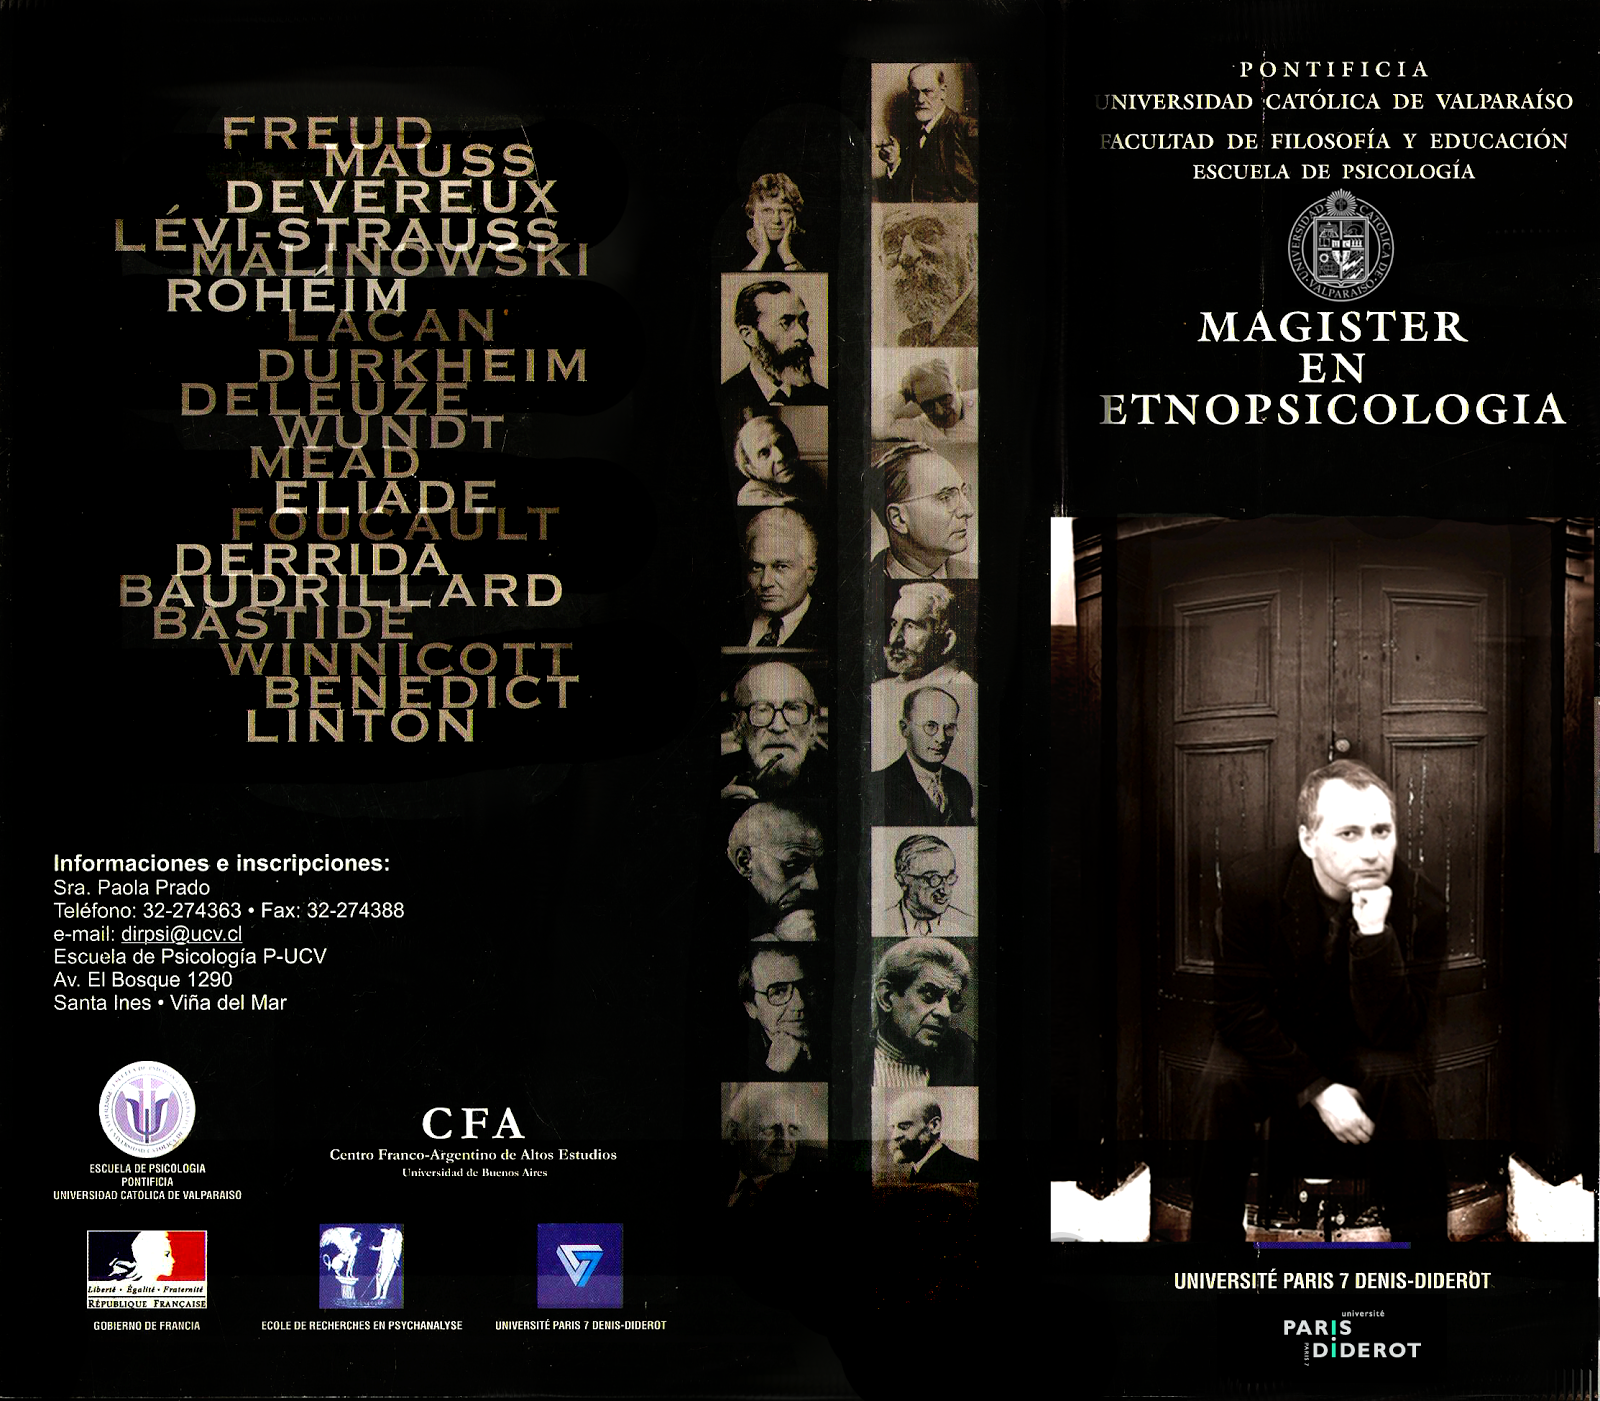 http://2.bp.blogspot.com/-7EPgQuw3dNM/U1FpFPeTX4I/AAAAAAAASPg/1_e7JnbvM6M/s1600/Magister+en+Etno+Psicologia_+Dr.+Adolfo+Vasquez+Rocca++.png